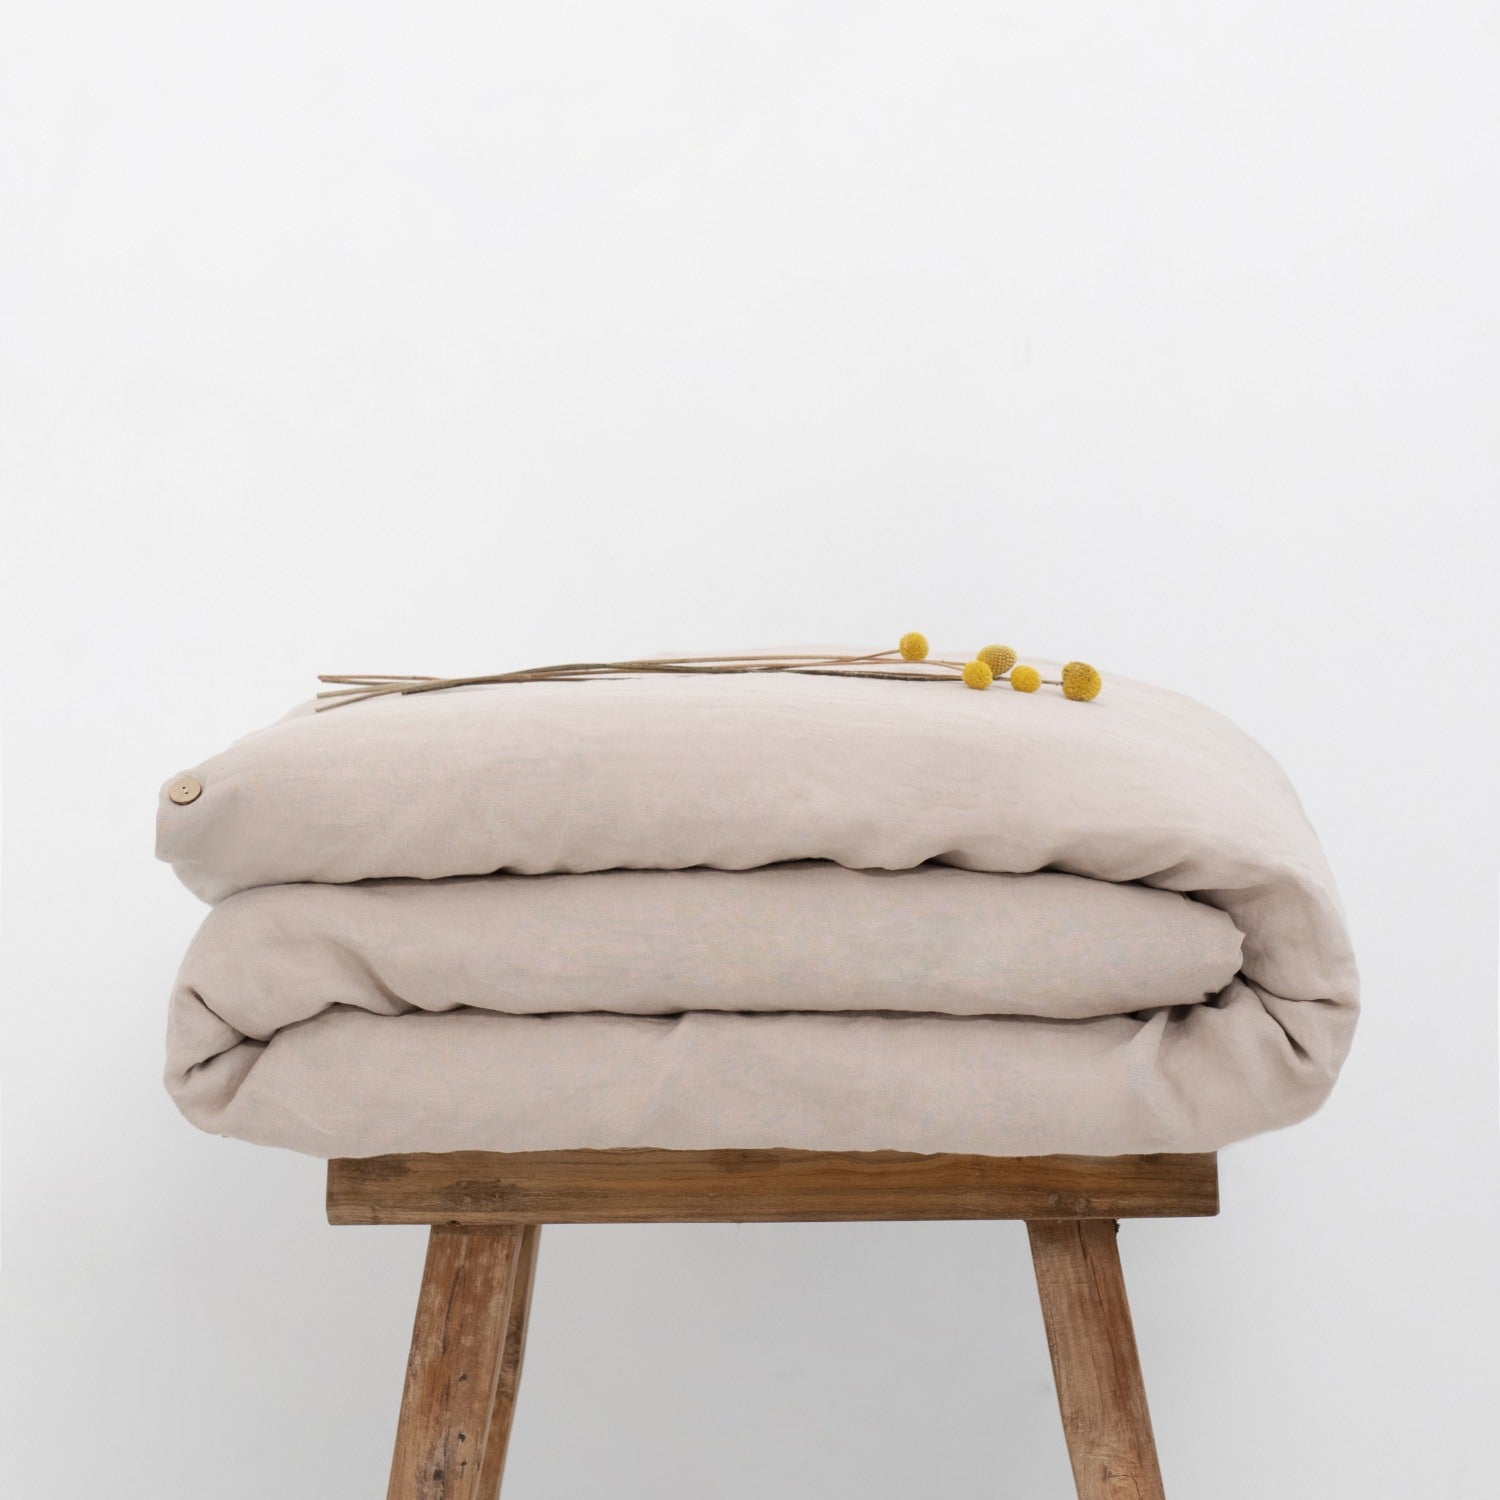 Coria Caress Hemp Comforter - Sustainable Hemp Duvet Cover